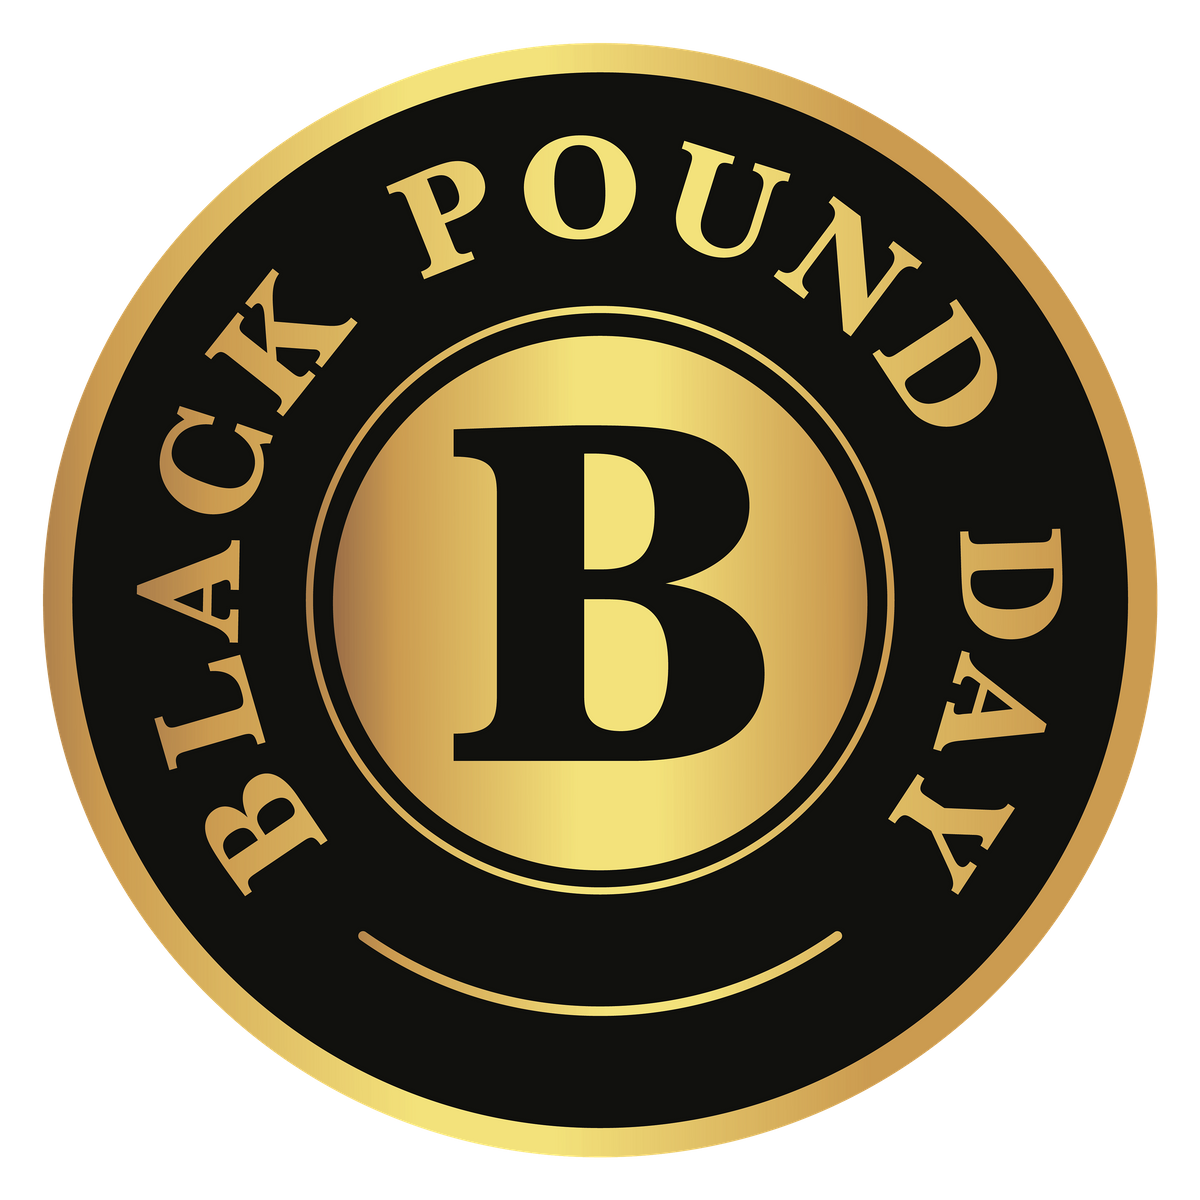 Black Pound Day March 2021